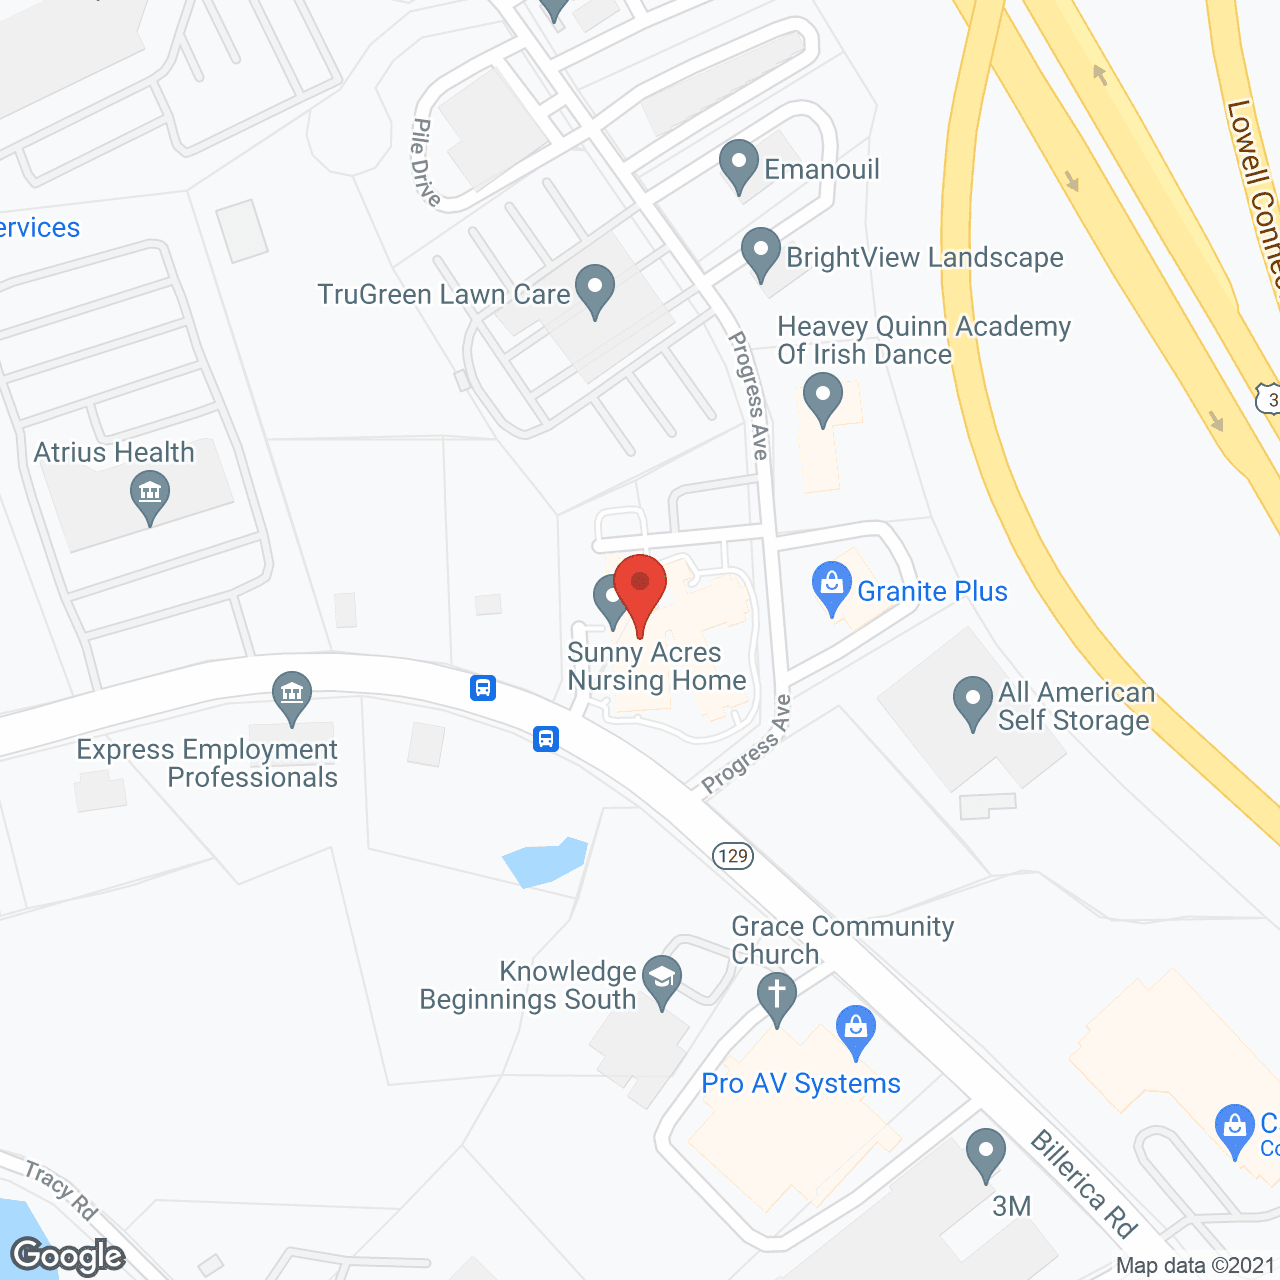 Sunny Acres Nursing Home in google map